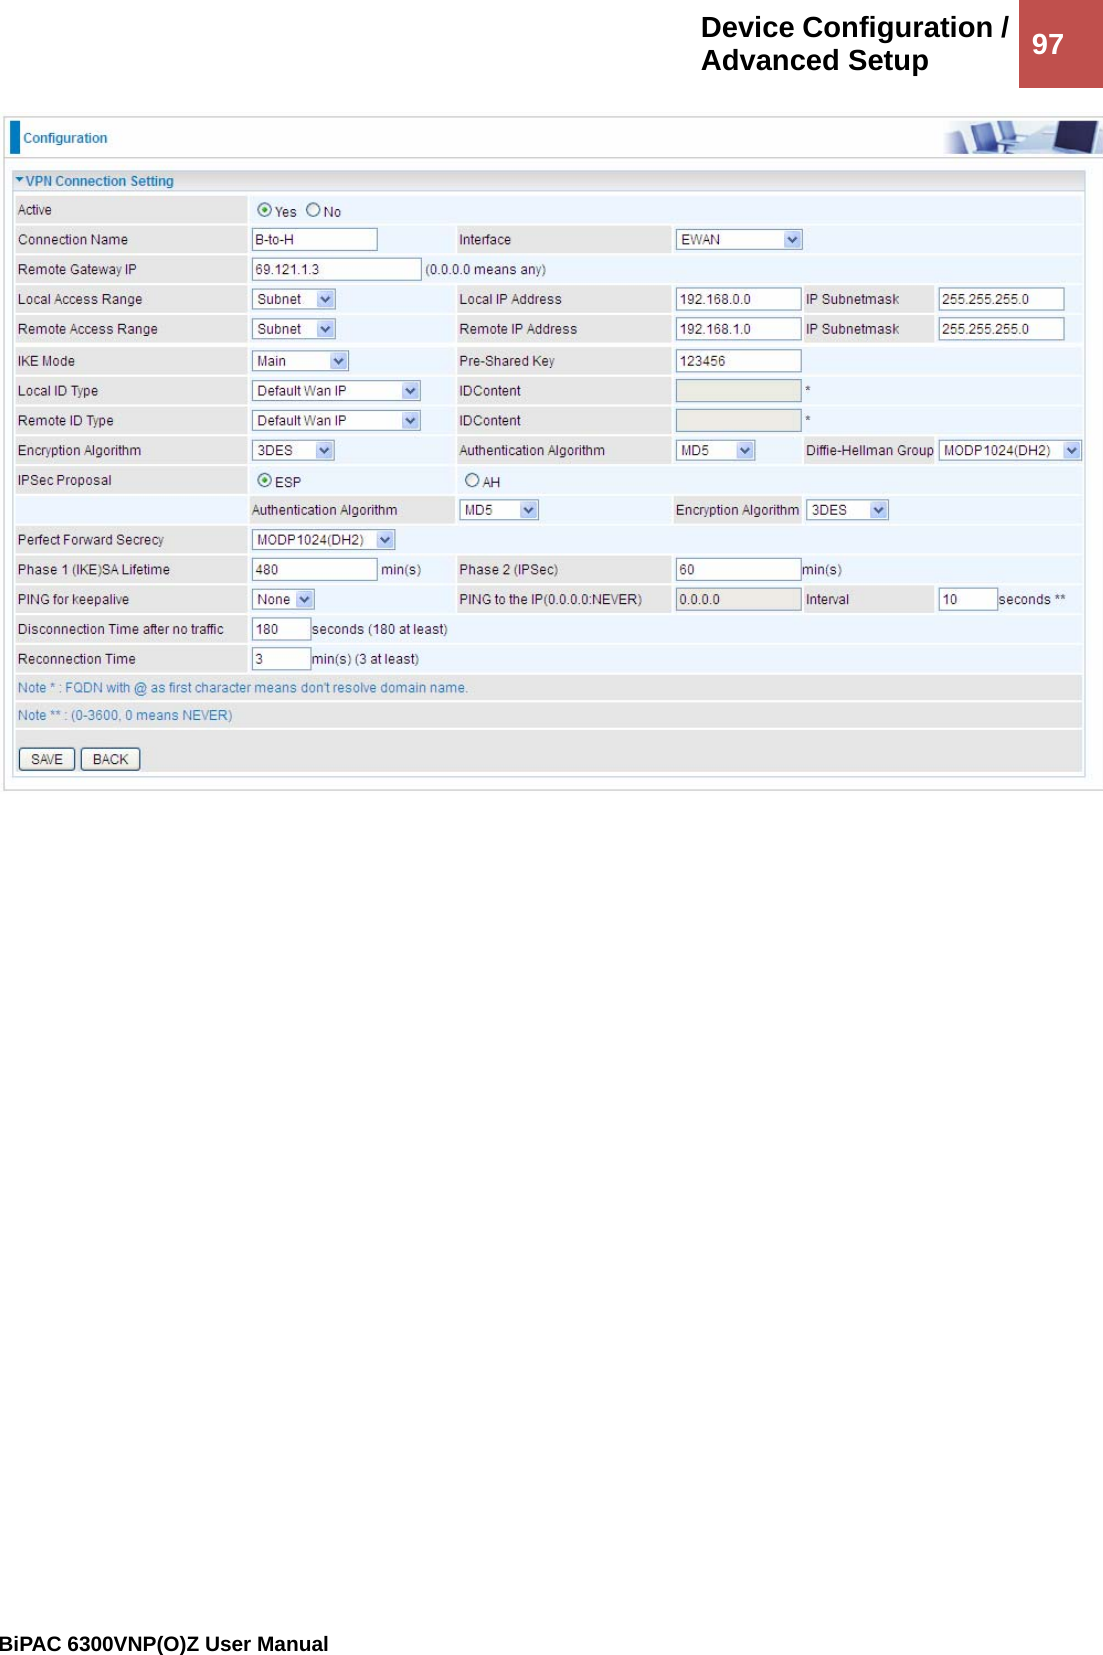 Device Configuration /Advanced Setup  97                                                BiPAC 6300VNP(O)Z User Manual   